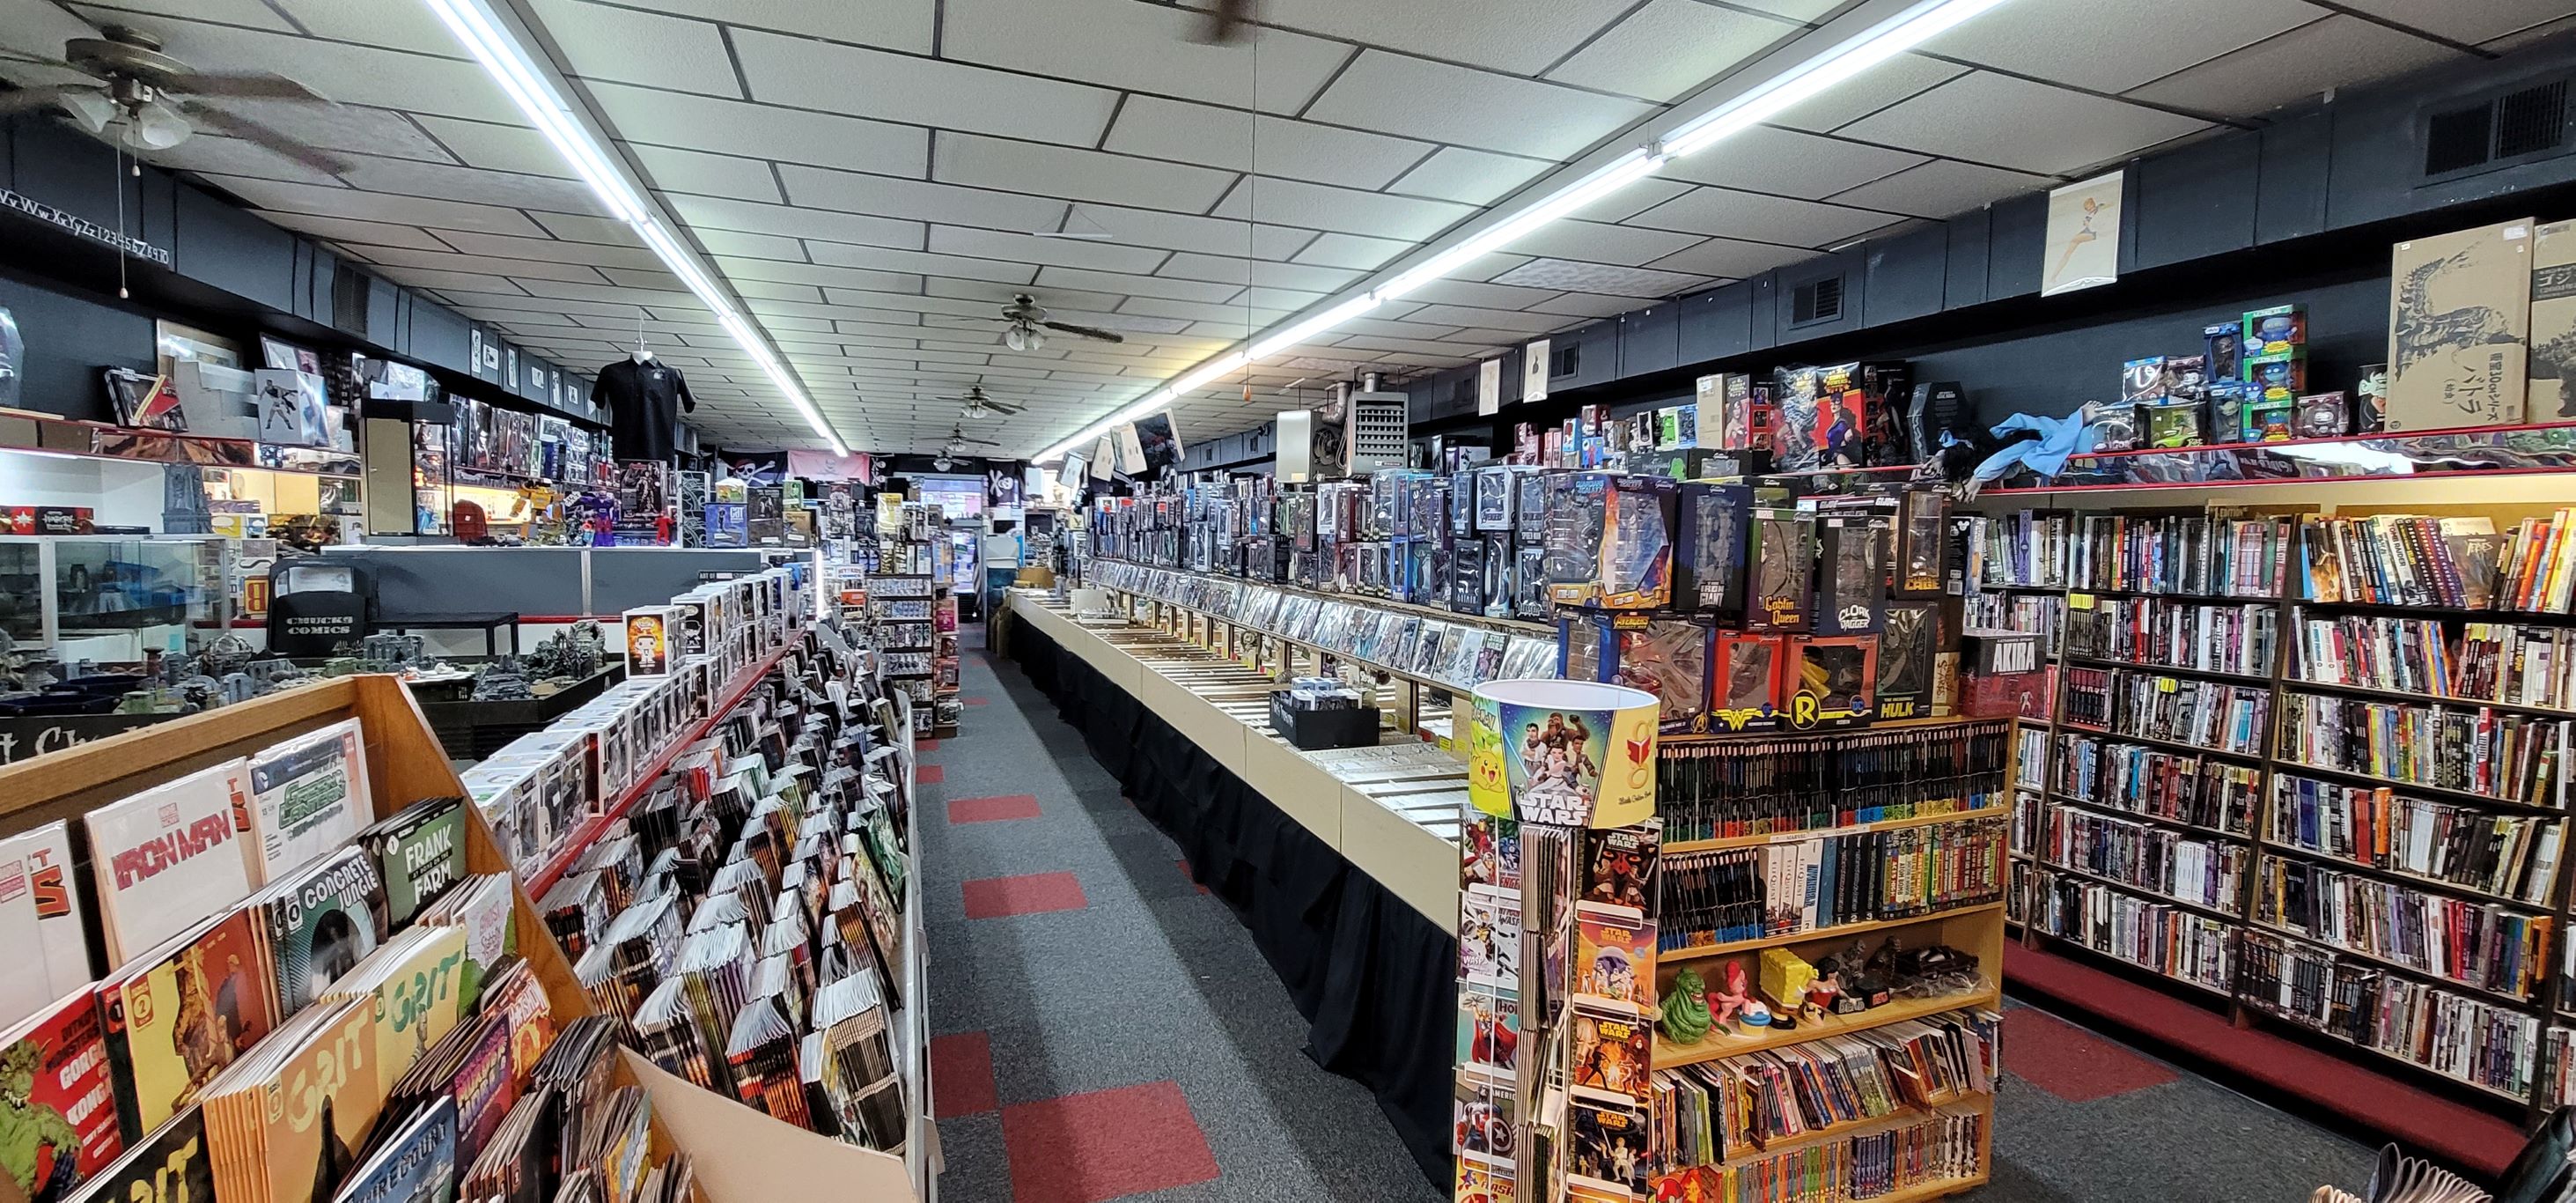 Inside Chucks Comics Store View